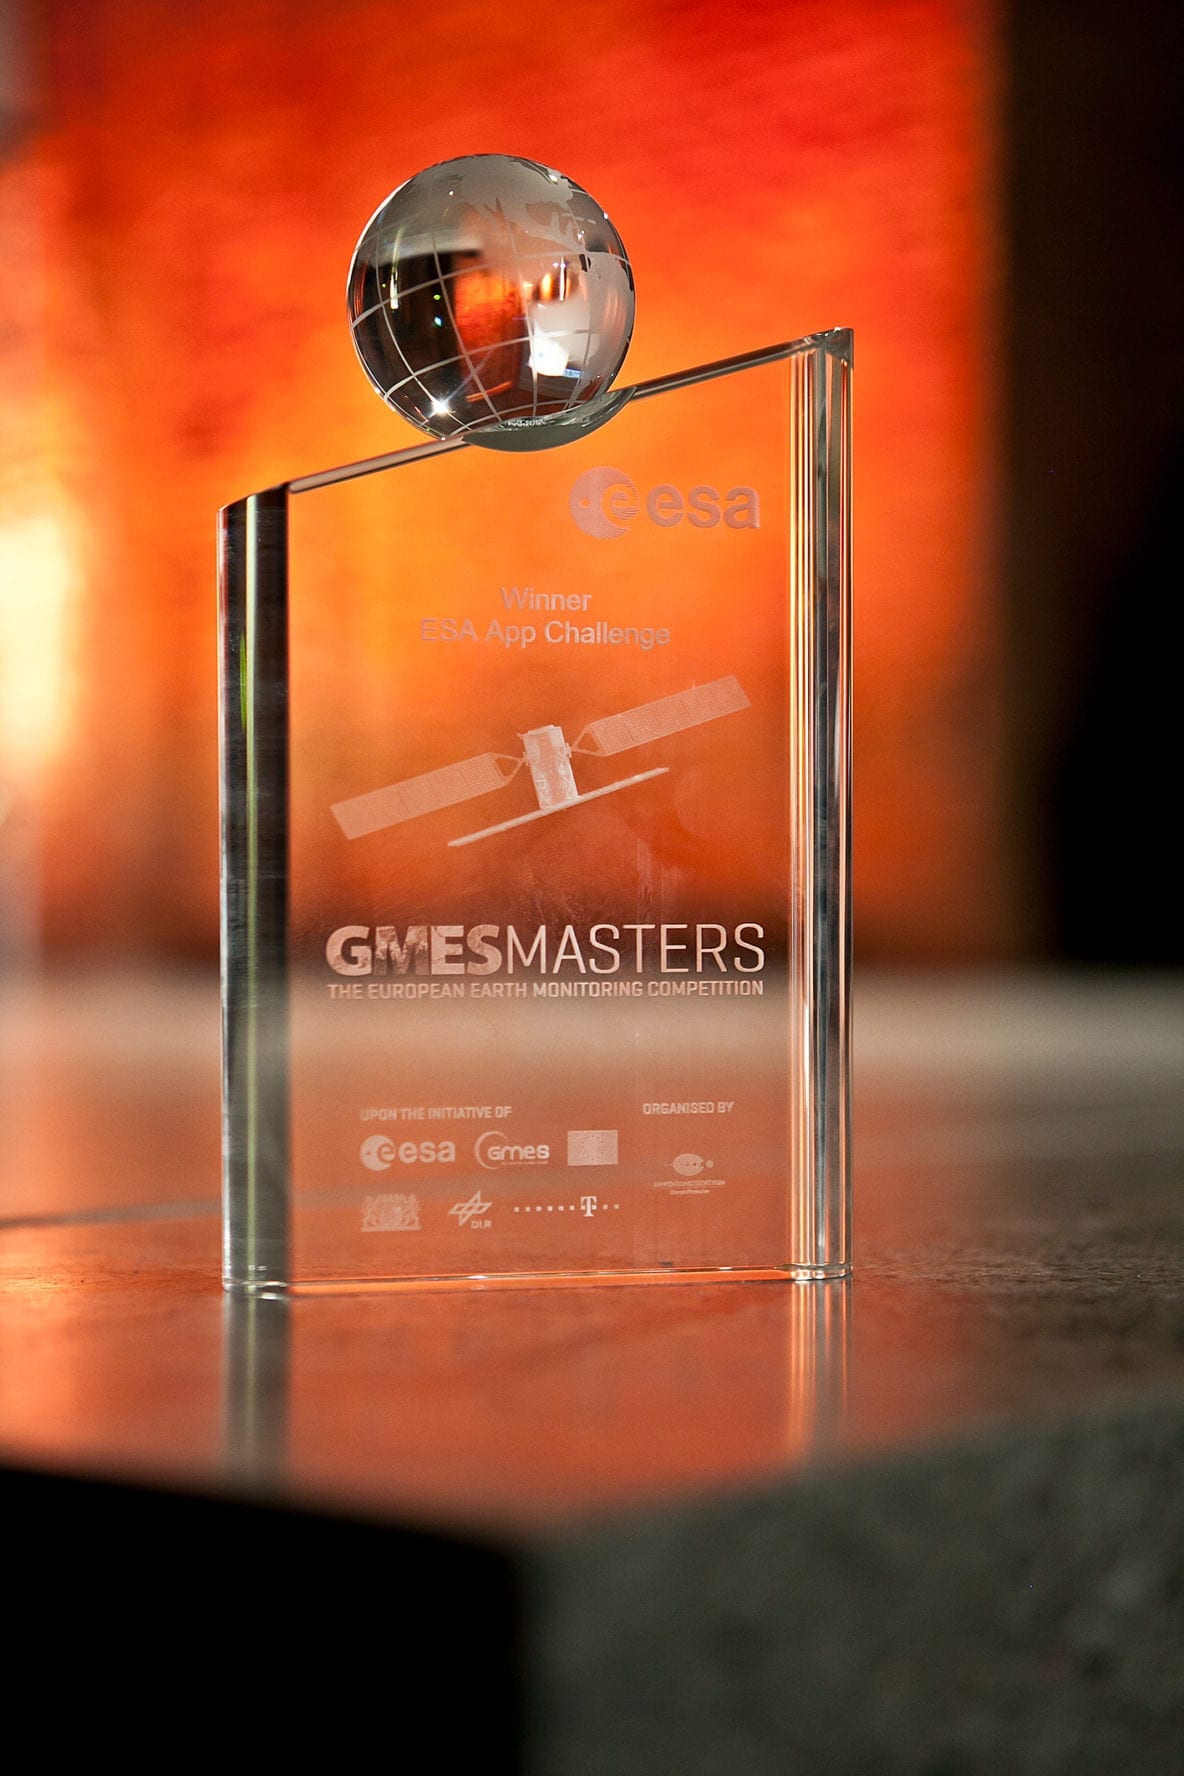 Image of the GMES Masters Trophy. Source: Anwendungszentrum GmbH Oberpfaffenhofen.